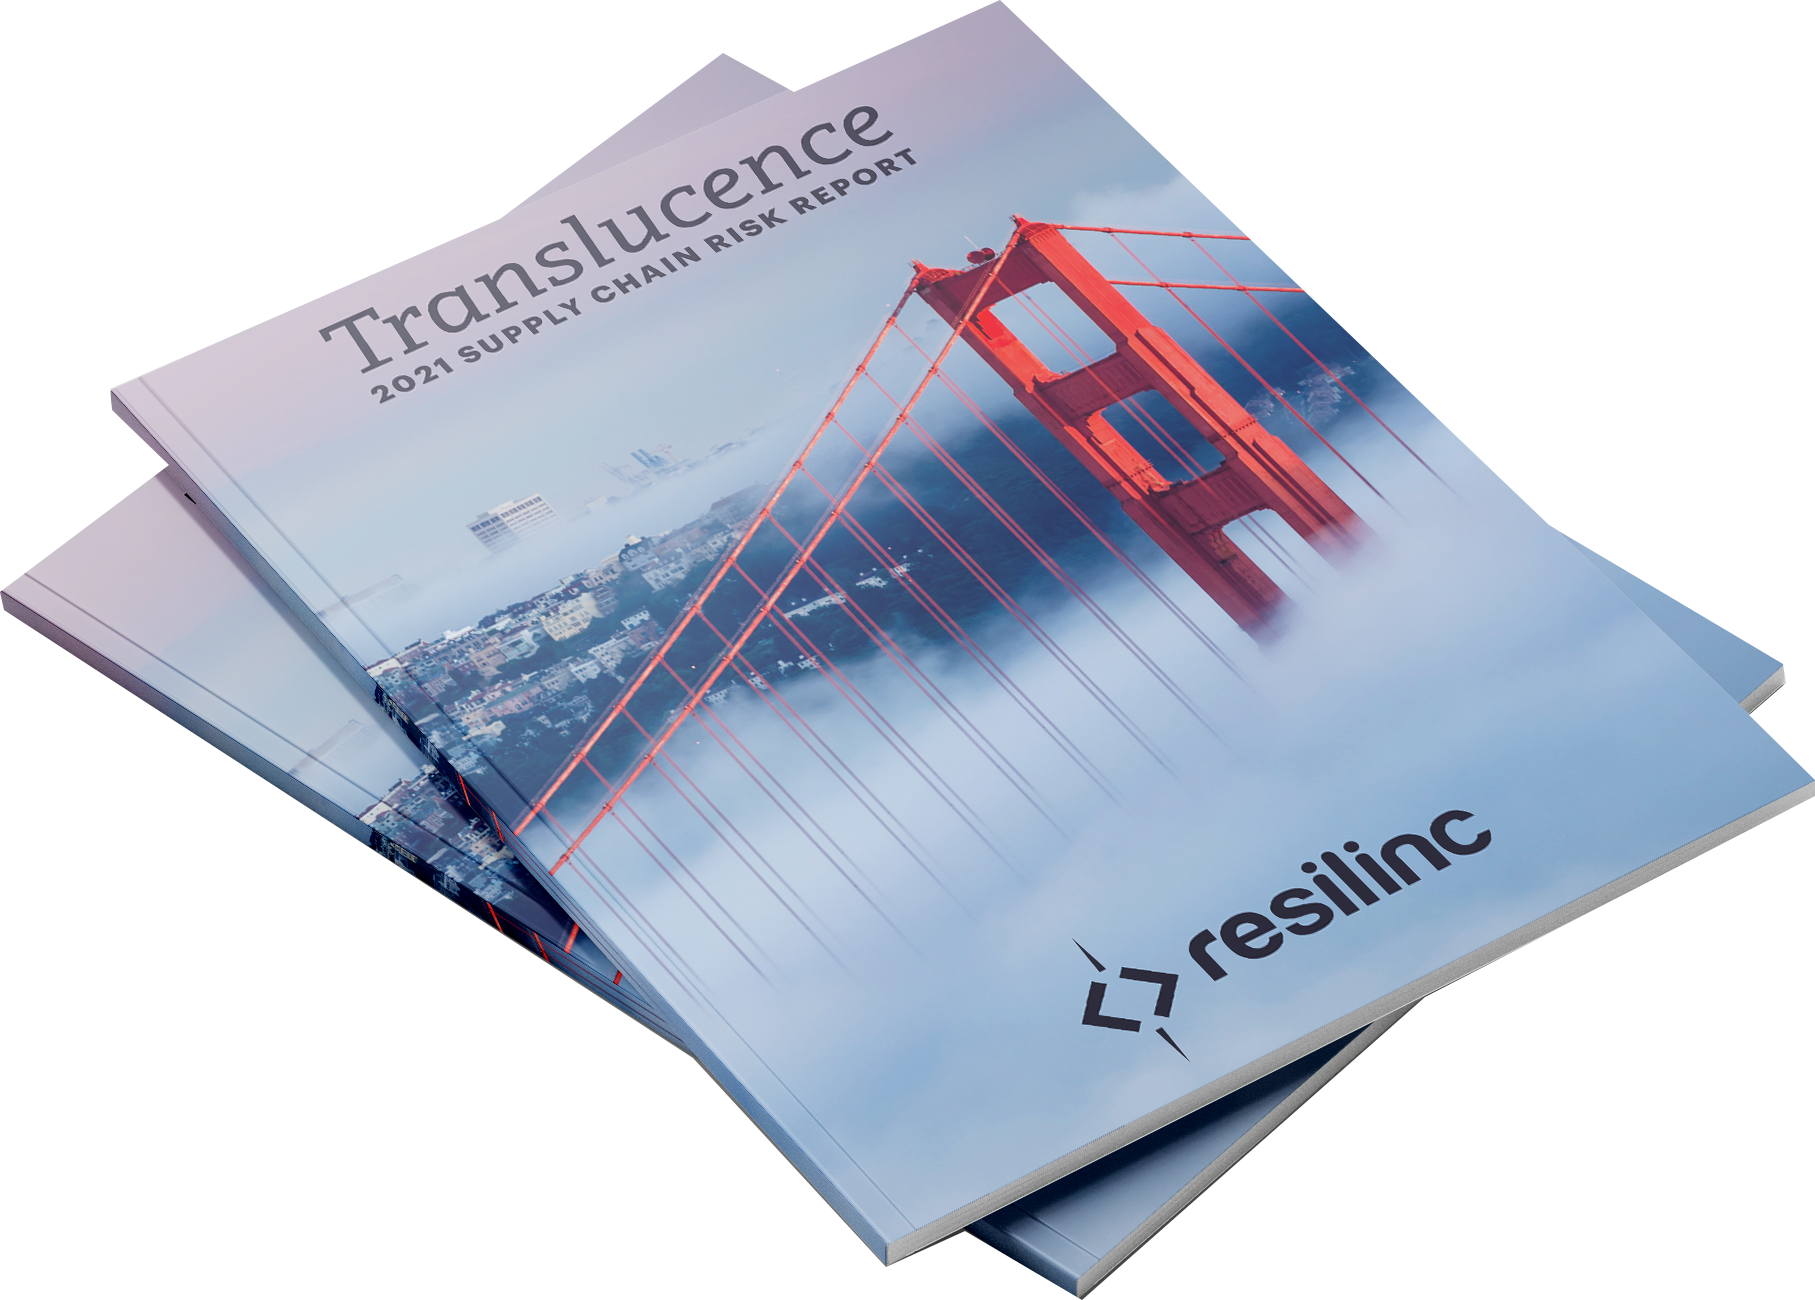 Translucence - Resilinc Annual Report 2021